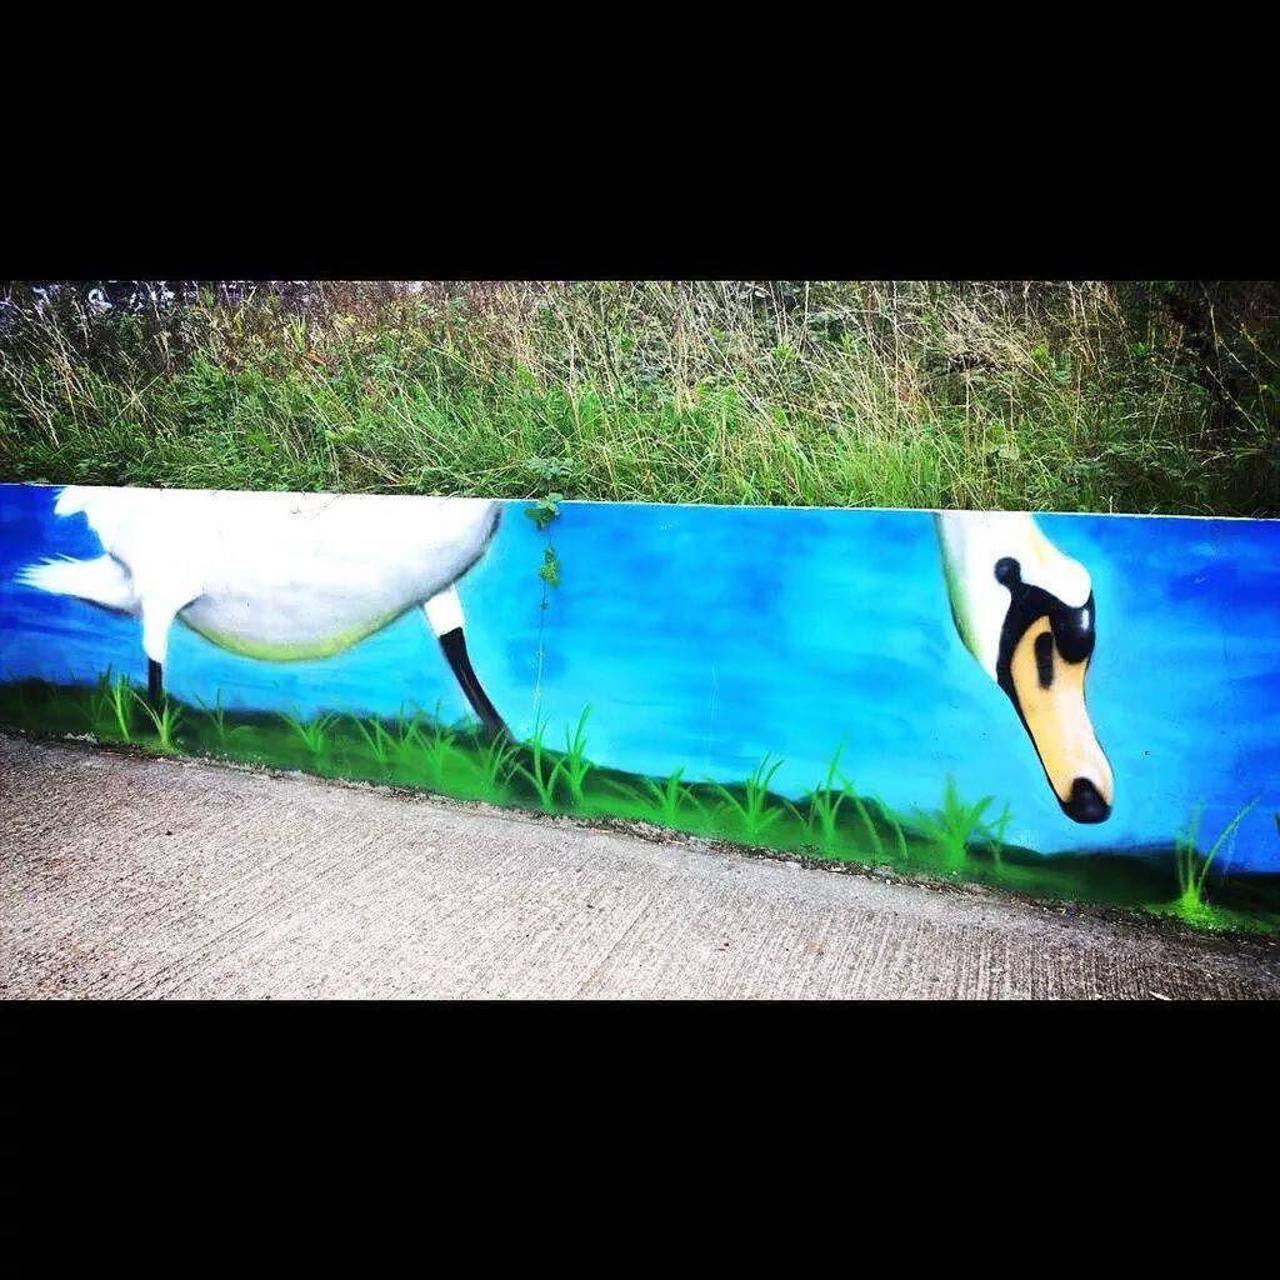 #streetartlondon #notbanksyforum #swan by #dogdays777 #StreetArt #Graffiti #mural by sjaakbenigoi http://t.co/tmT0CUdlM5